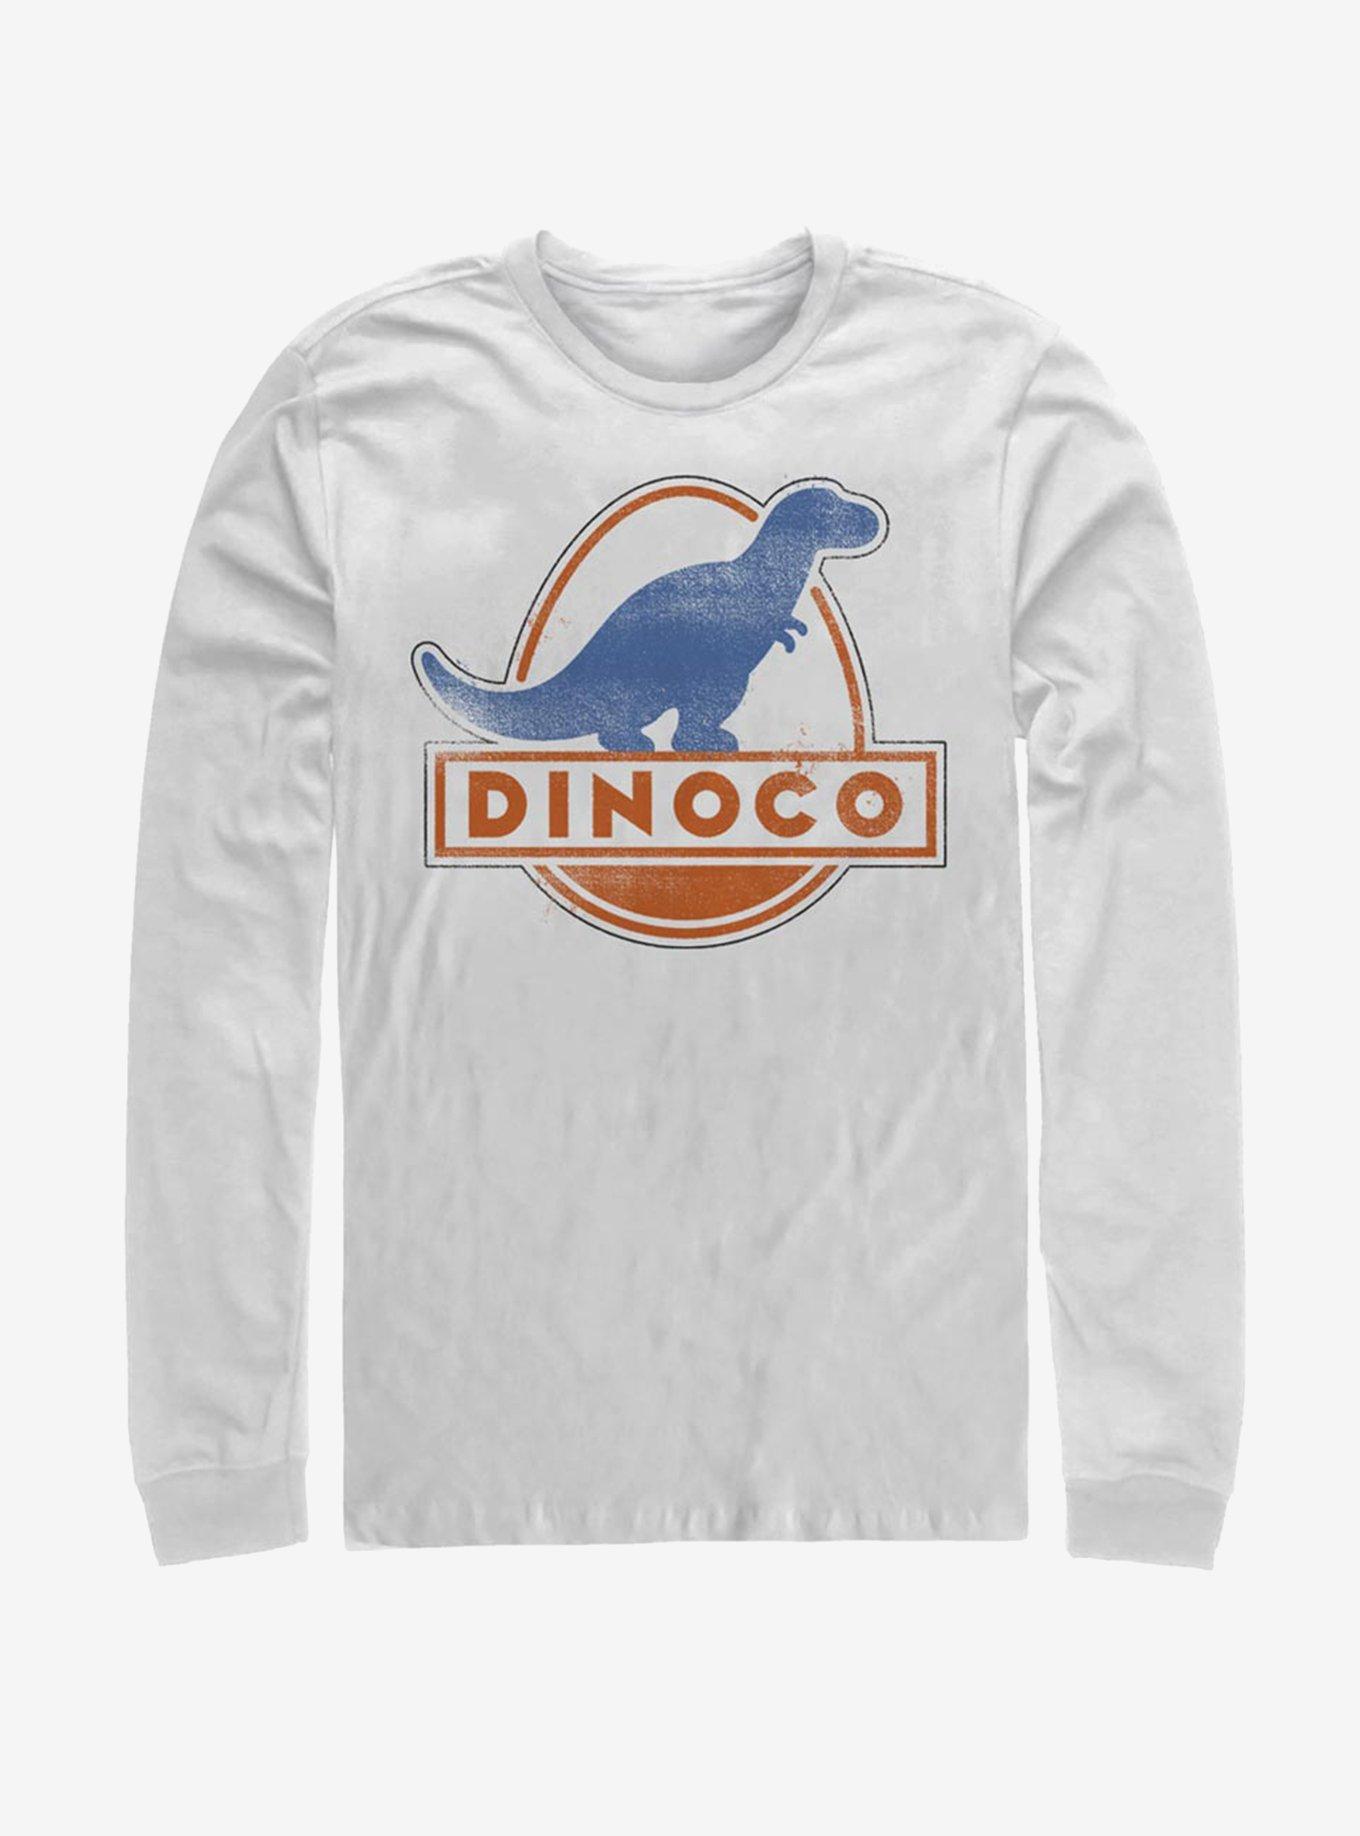 Disney Pixar Cars Dinoco Vintage Long-Sleeve T-Shirt, WHITE, hi-res